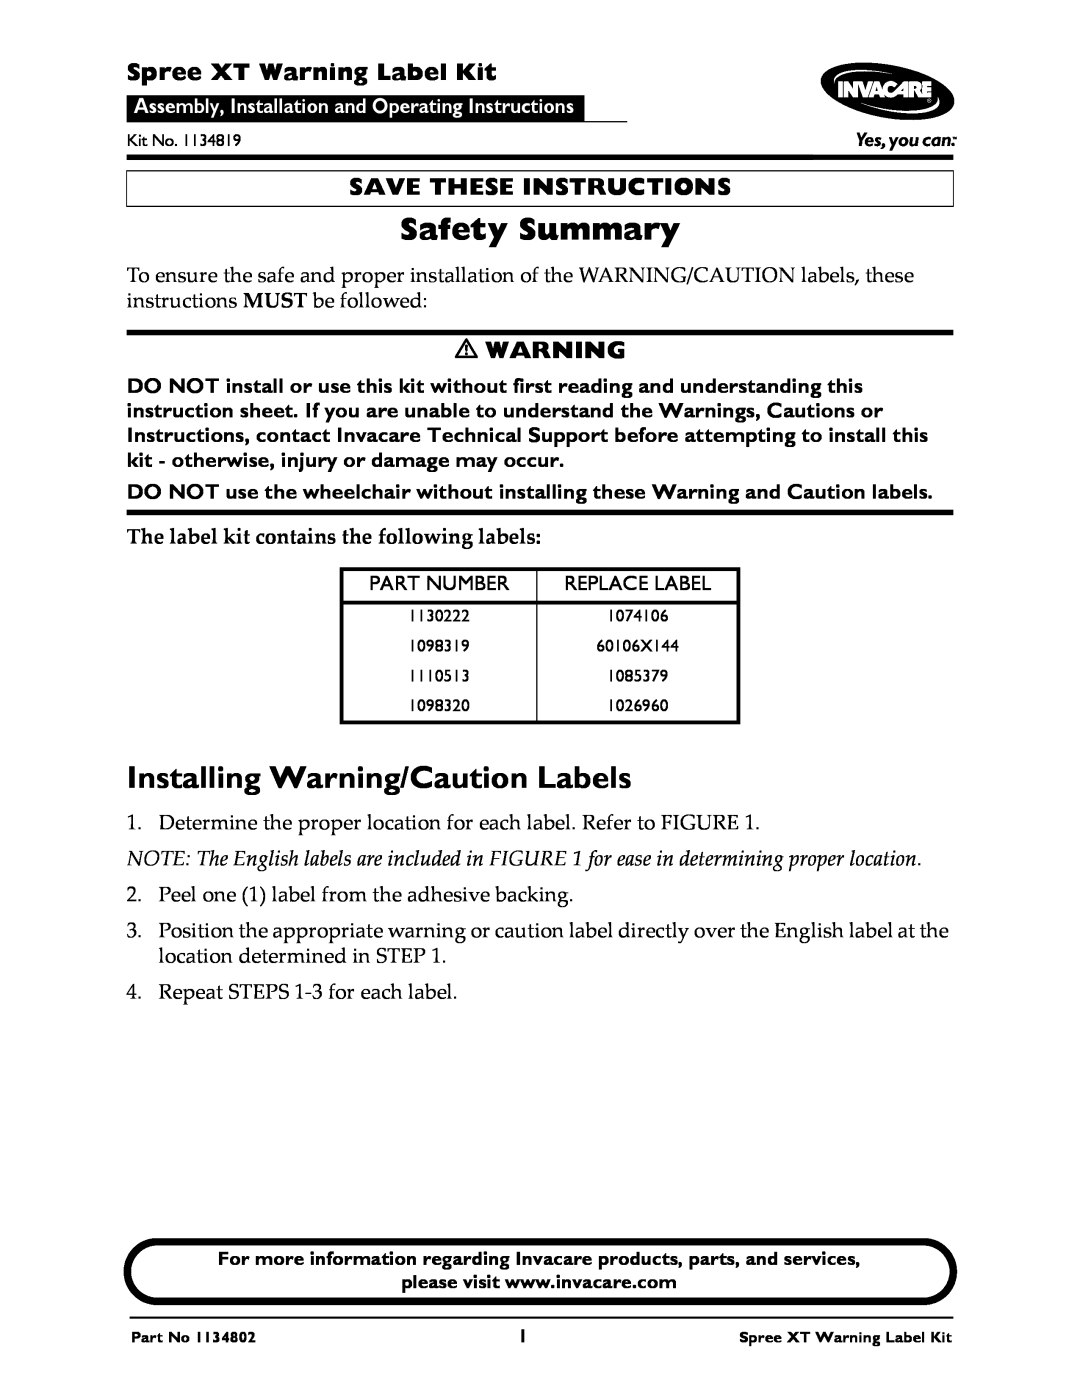 Invacare 1134802 1 instruction sheet Safety Summary, Installing Warning/Caution Labels, Spree XT Warning Label Kit 